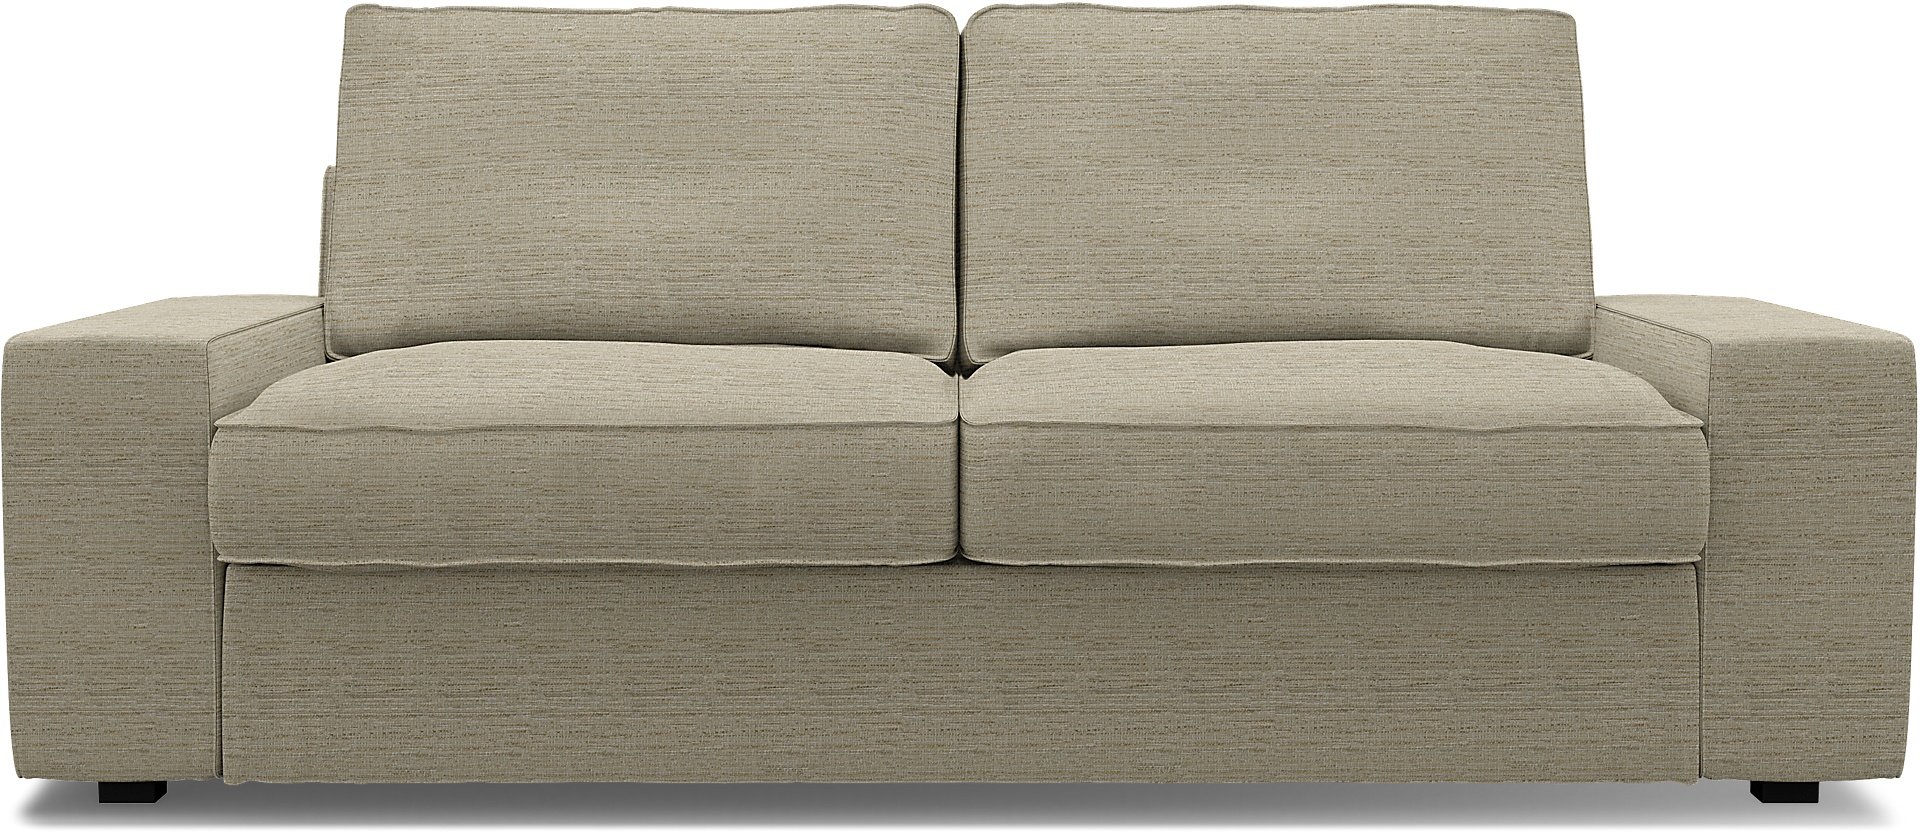 IKEA - Kivik 2 Seater Sofa Cover, Light Sand, Boucle & Texture - Bemz